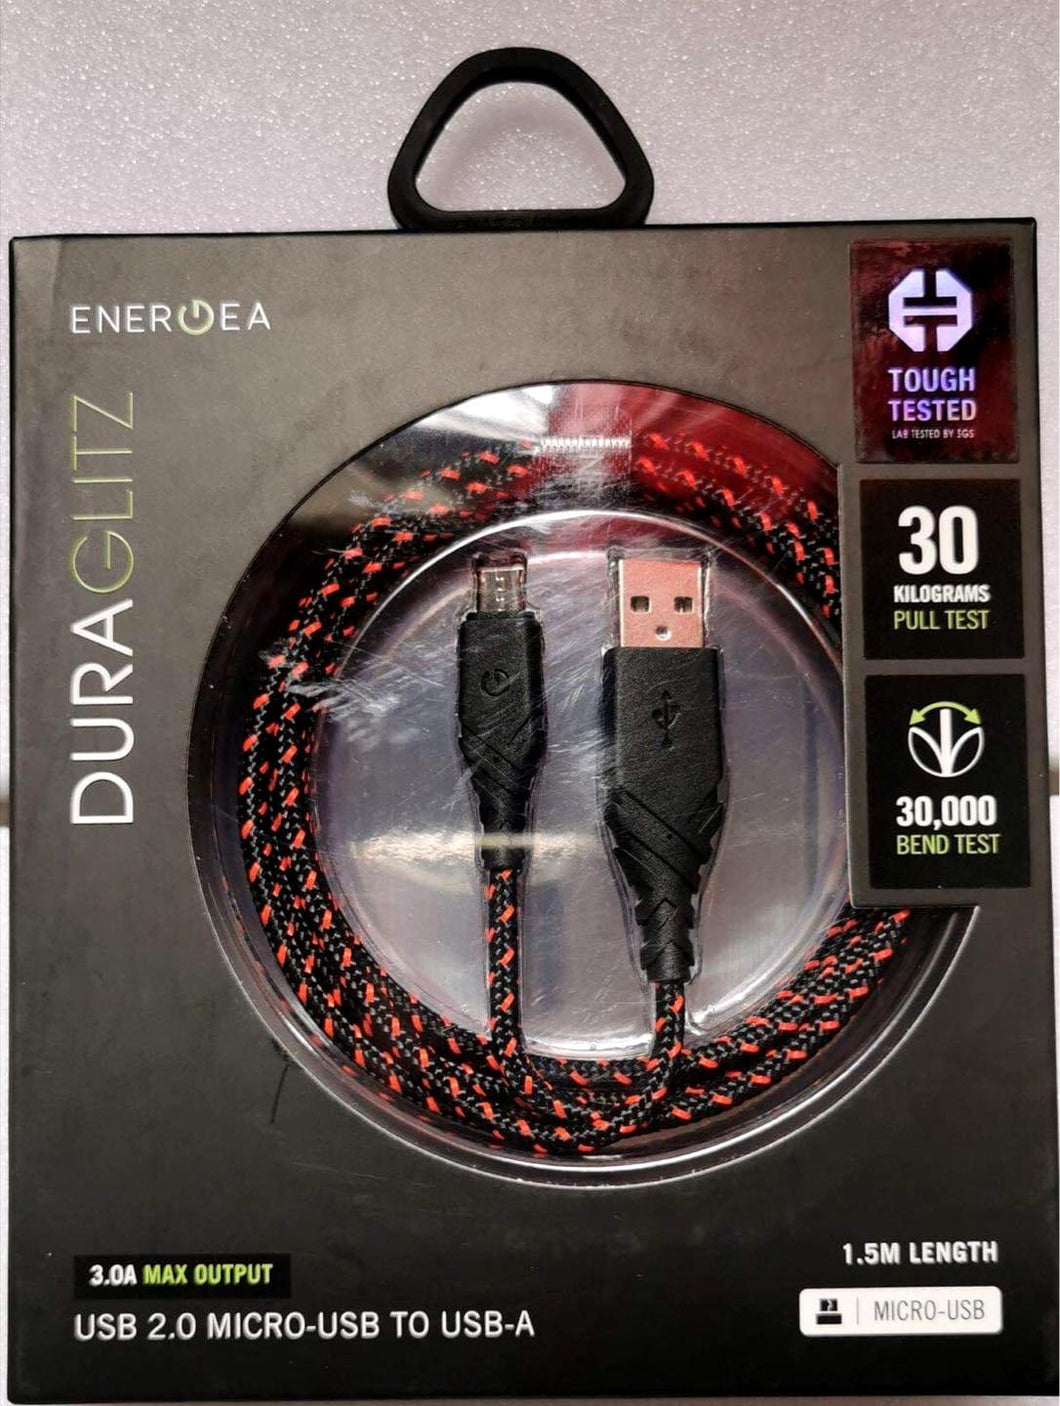 Energea DuraGlitz USB 2.0 MICRO-USB TO USB-A